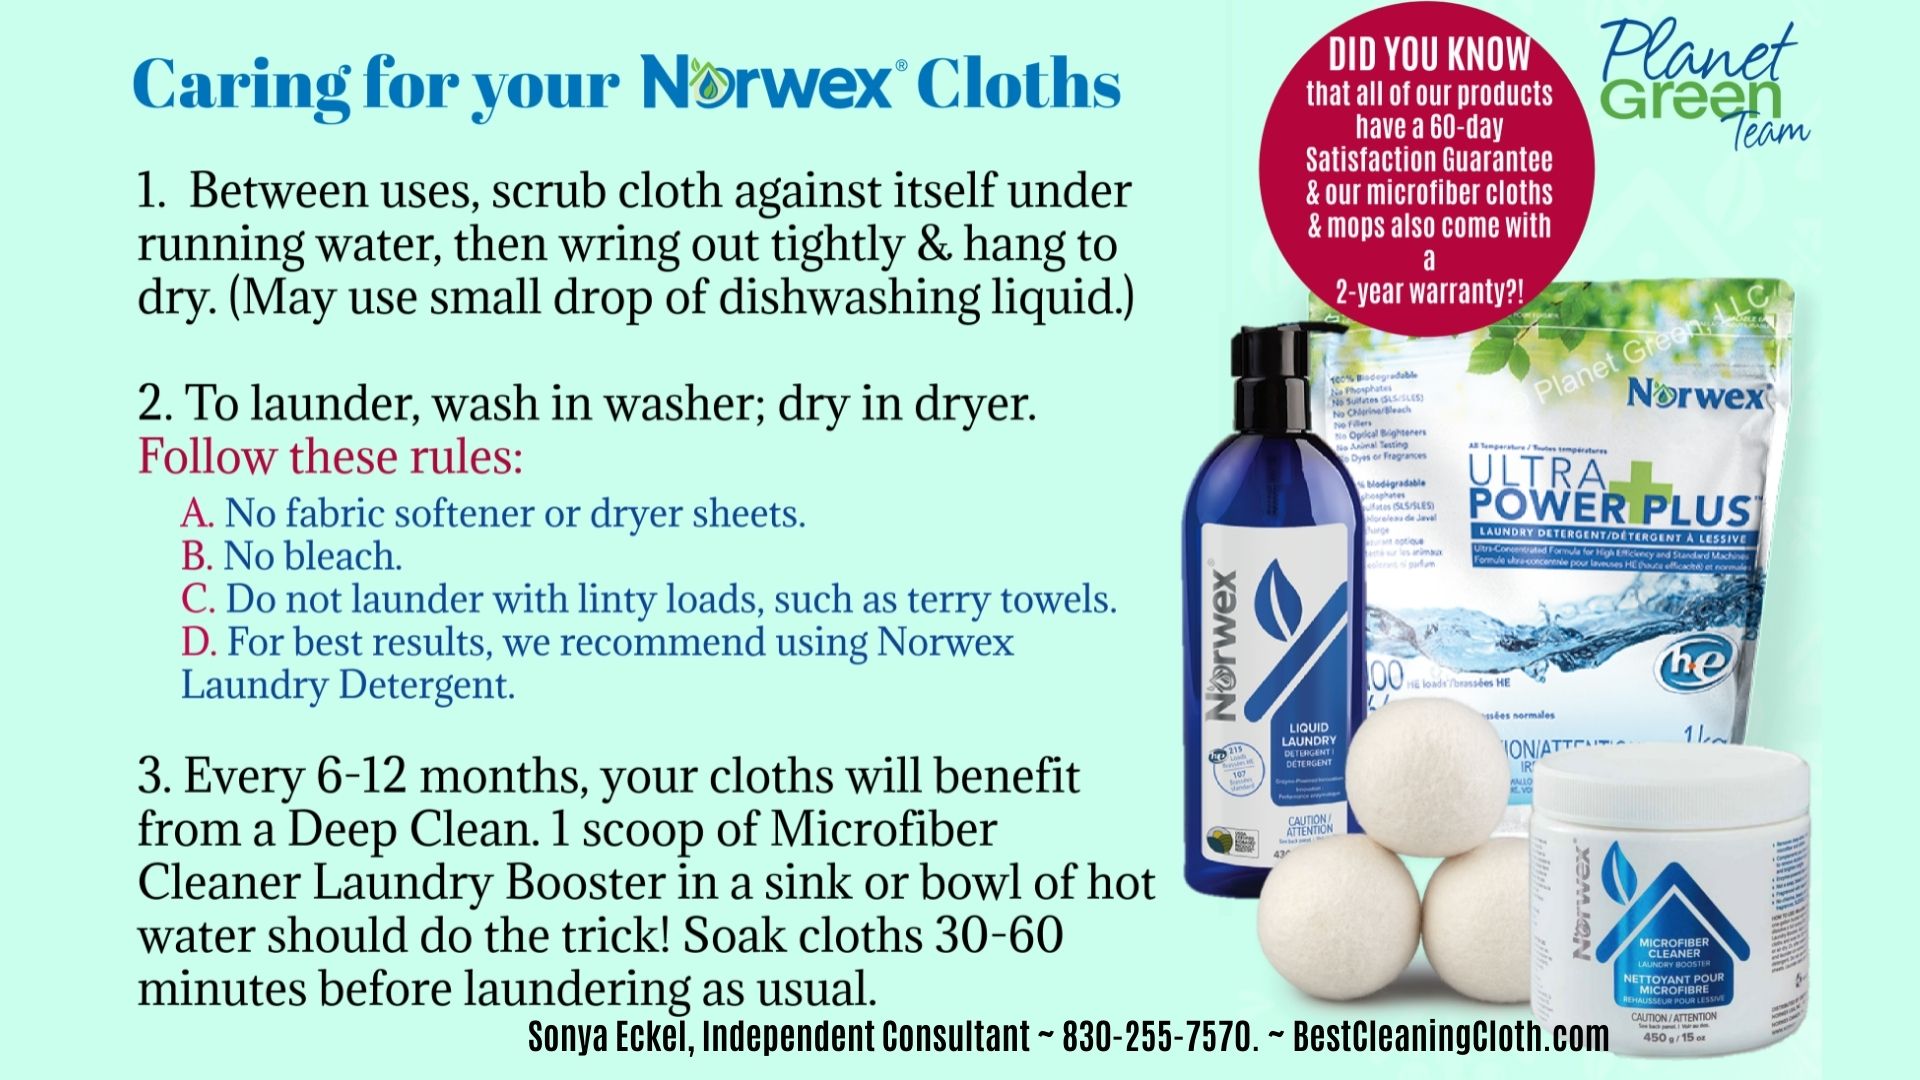 Norwex - reach for the Dishwashing Liquid, add one tablespoon